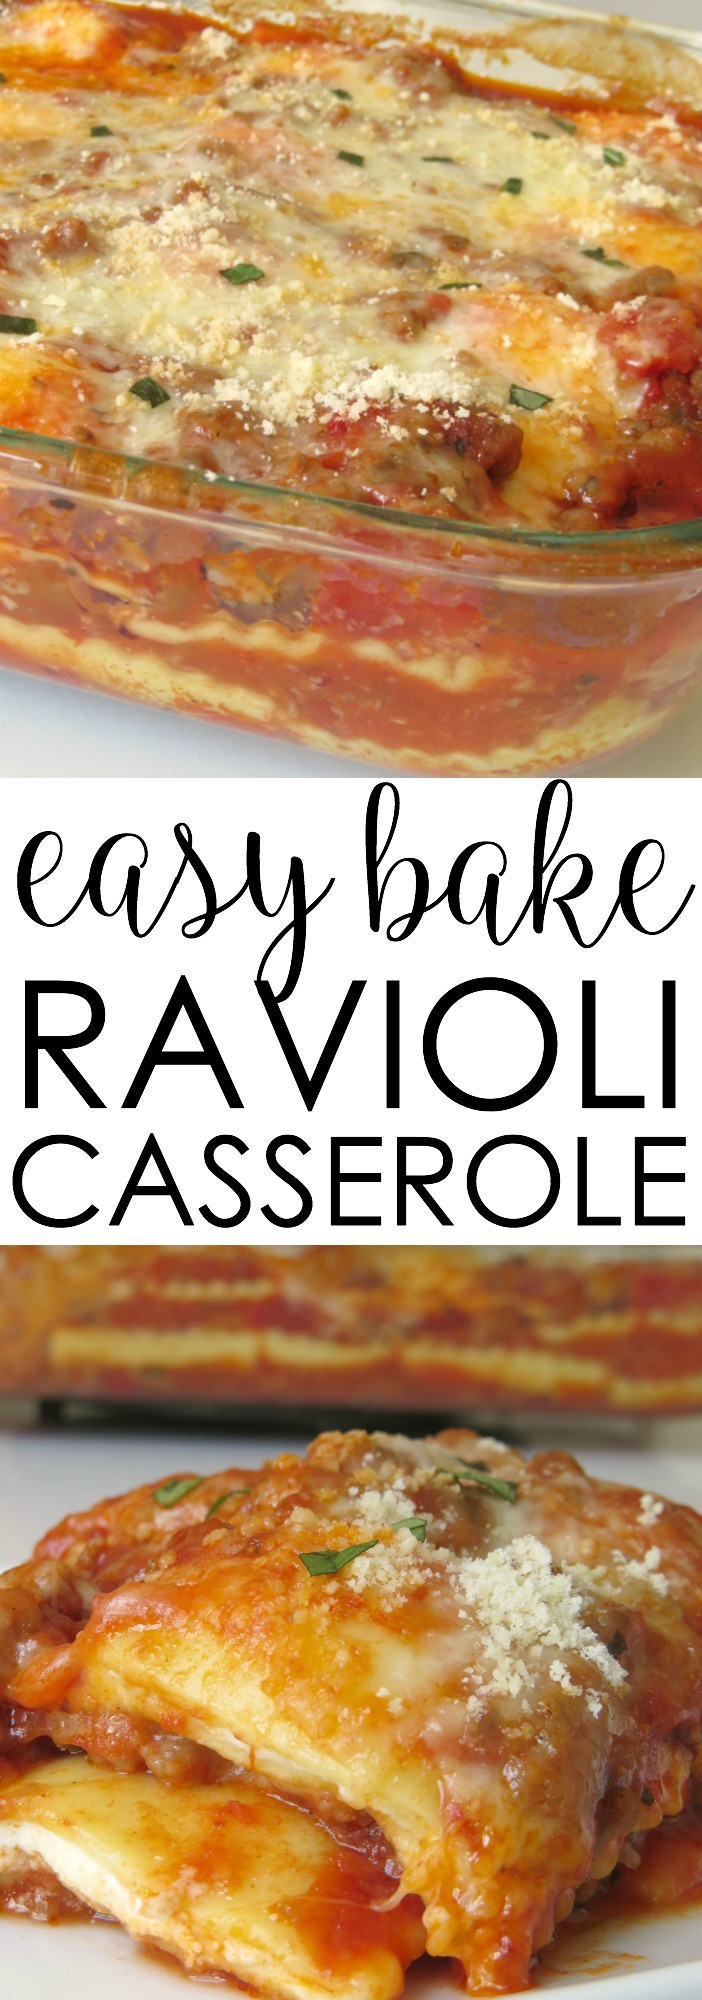 easy ravioli casserole recips